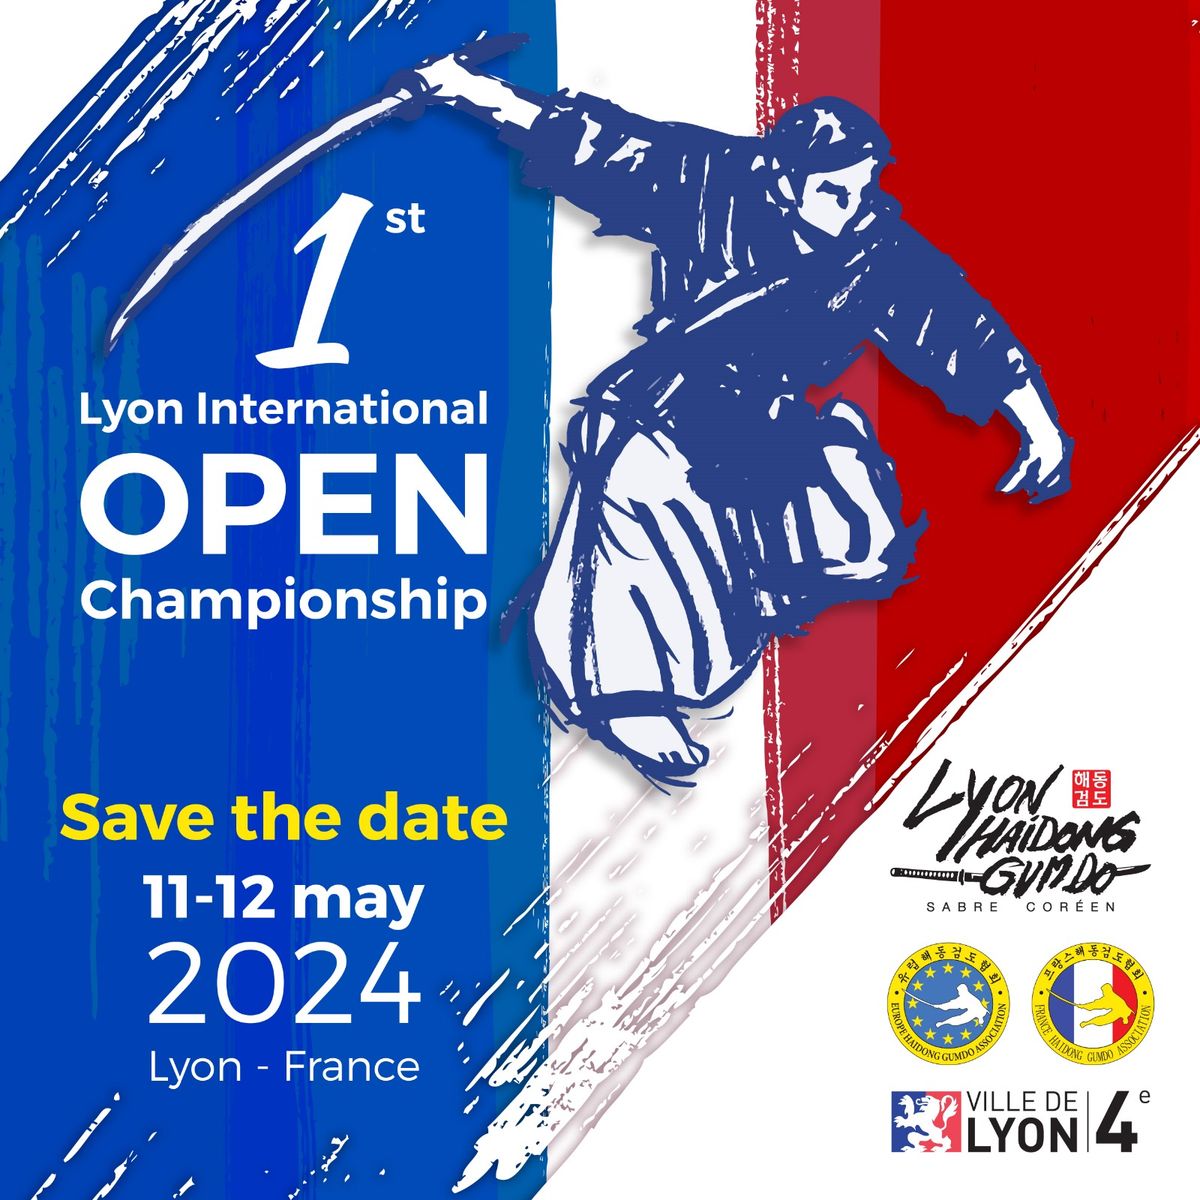 1st Lyon international Open Championship, Haidong Gumdo!